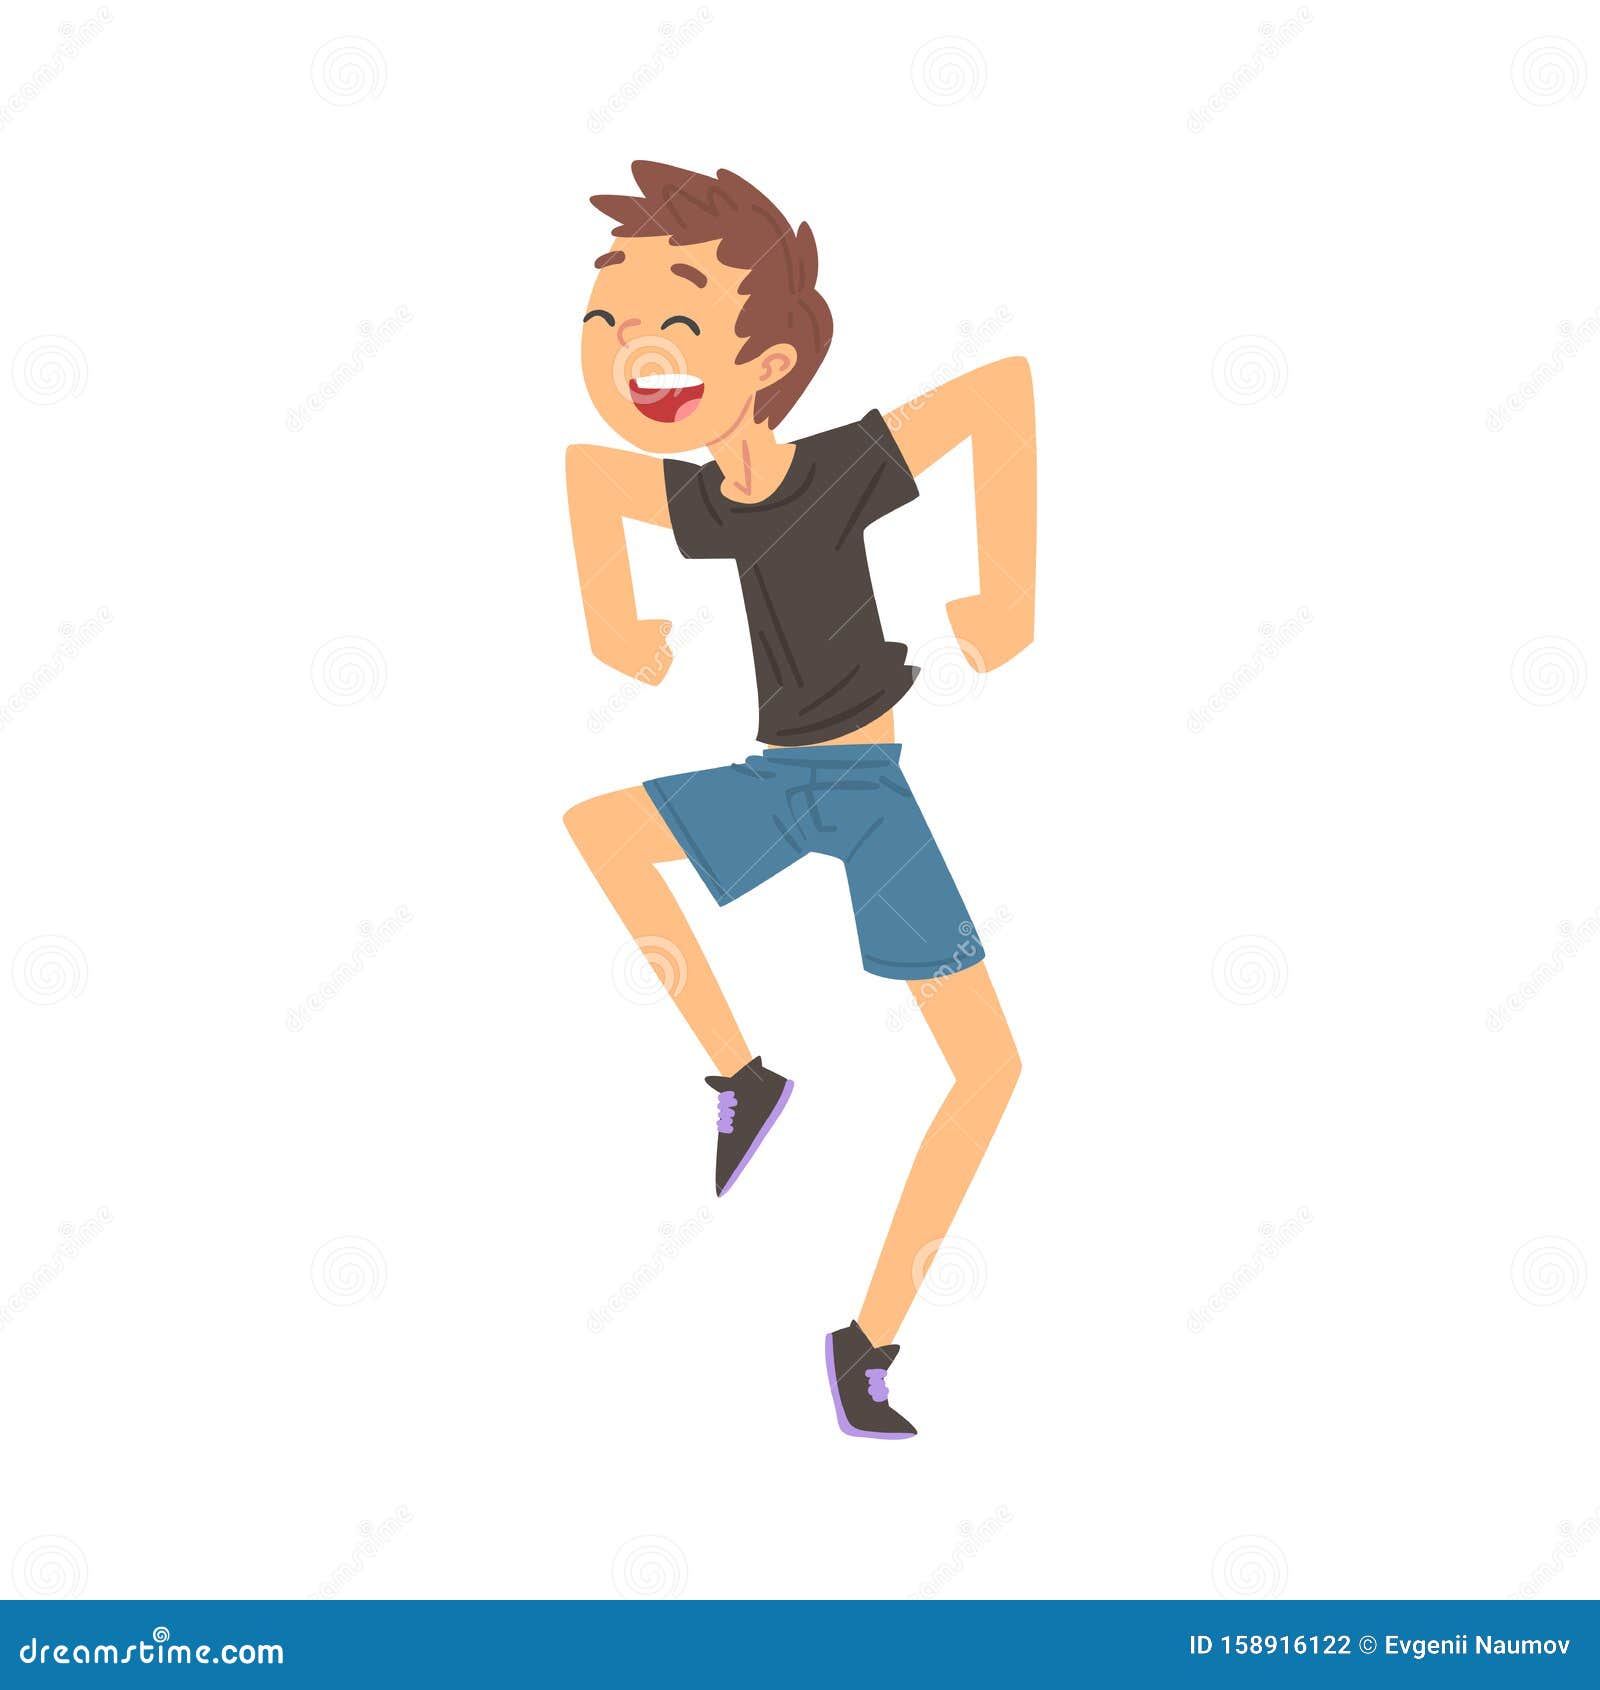 Smiling Happy Teen Boy Having Fun Cartoon Vector Illustration Stock Vector  - Illustration of jump, healthy: 158916122